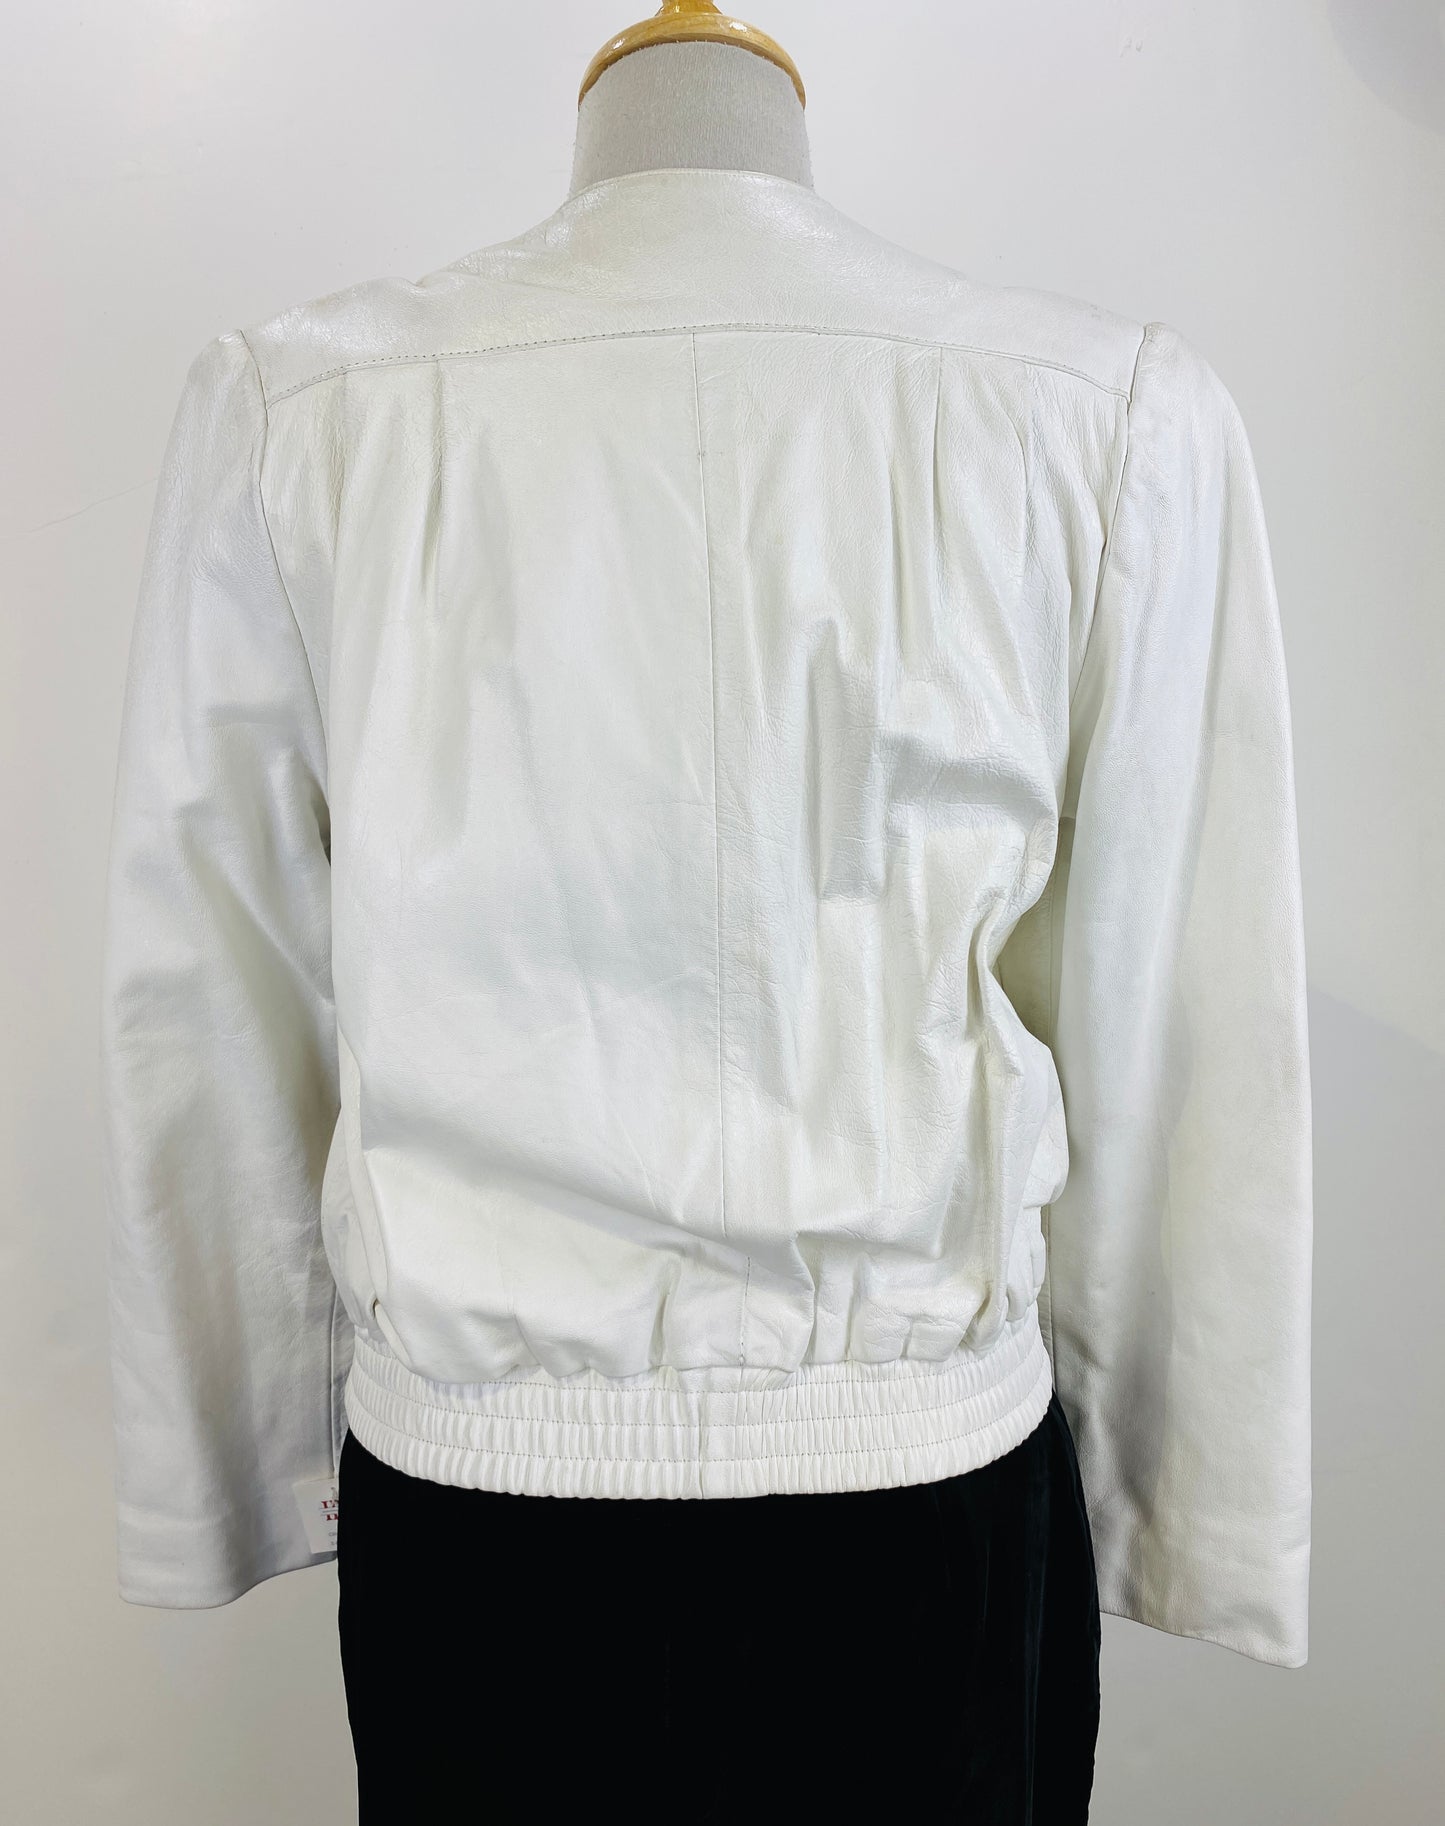 Vintage 1980s Women's White/ Red Leather Jacket, Medium